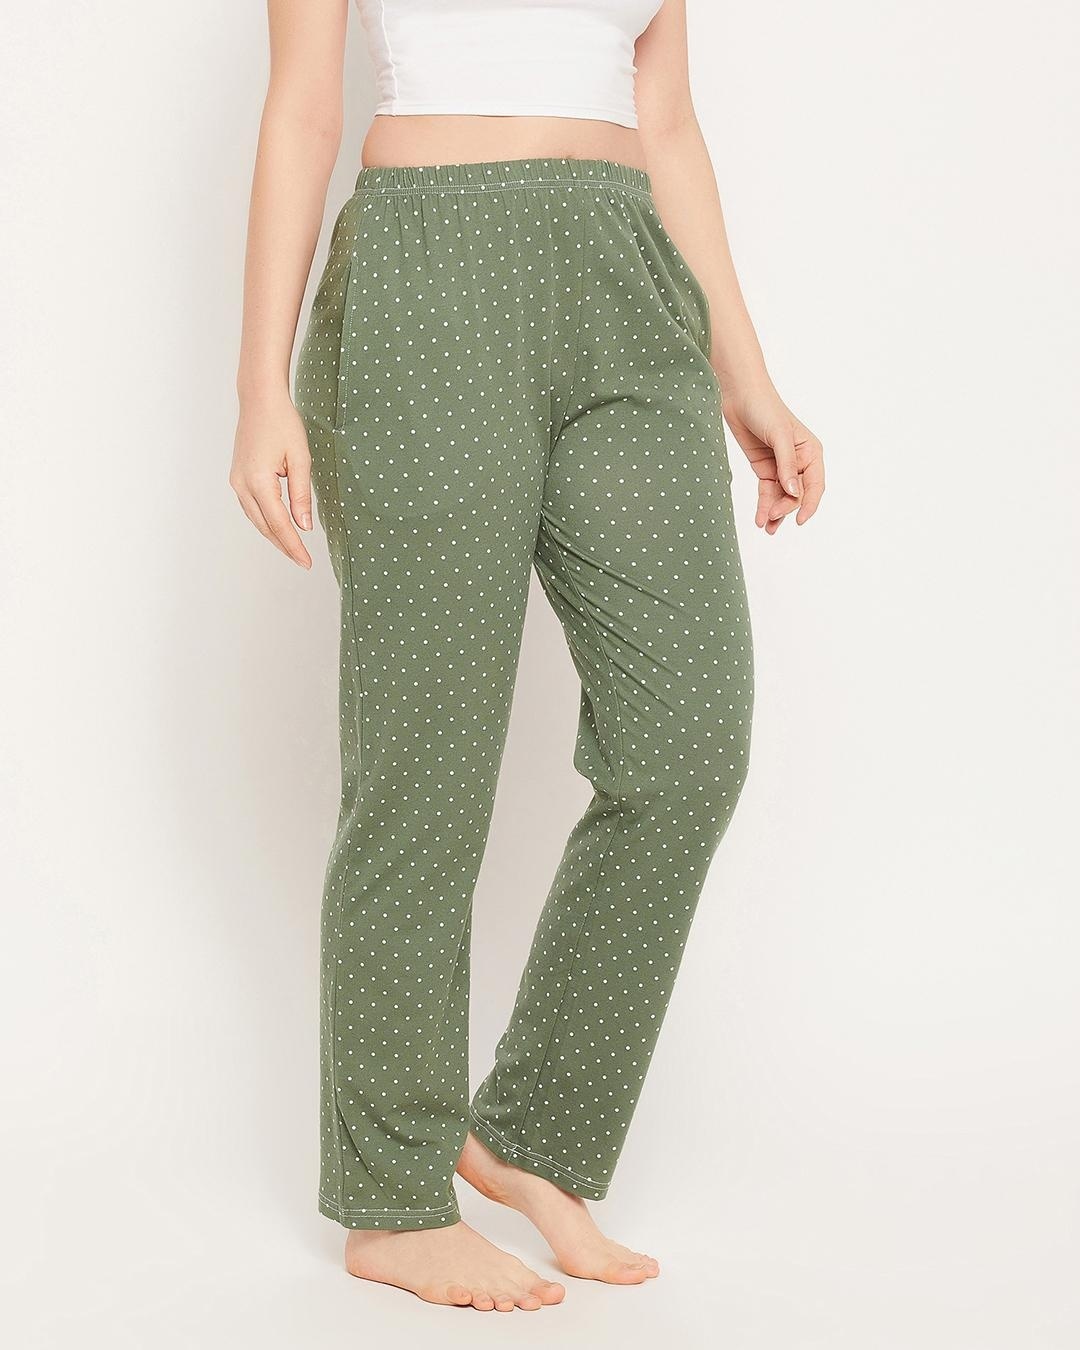 Shop Women's Green Polka Printed Pyjamas-Design